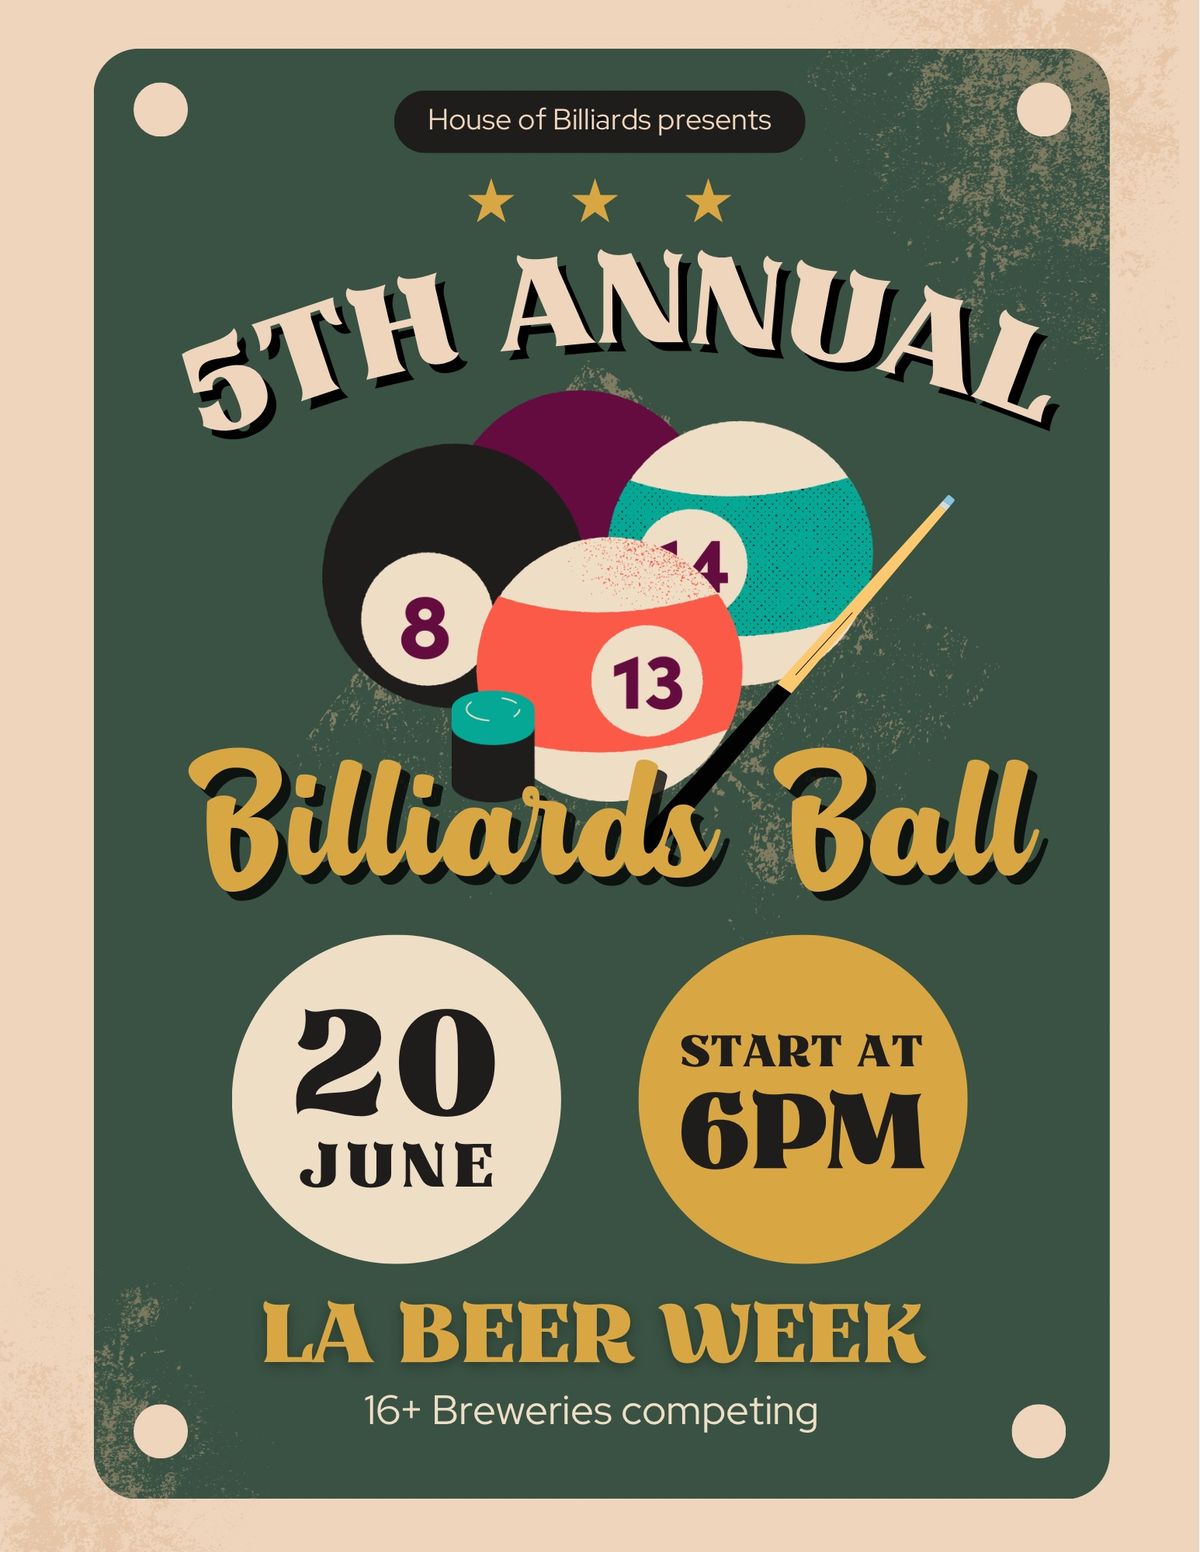 LA Beer Week Billiards Ball 5.0